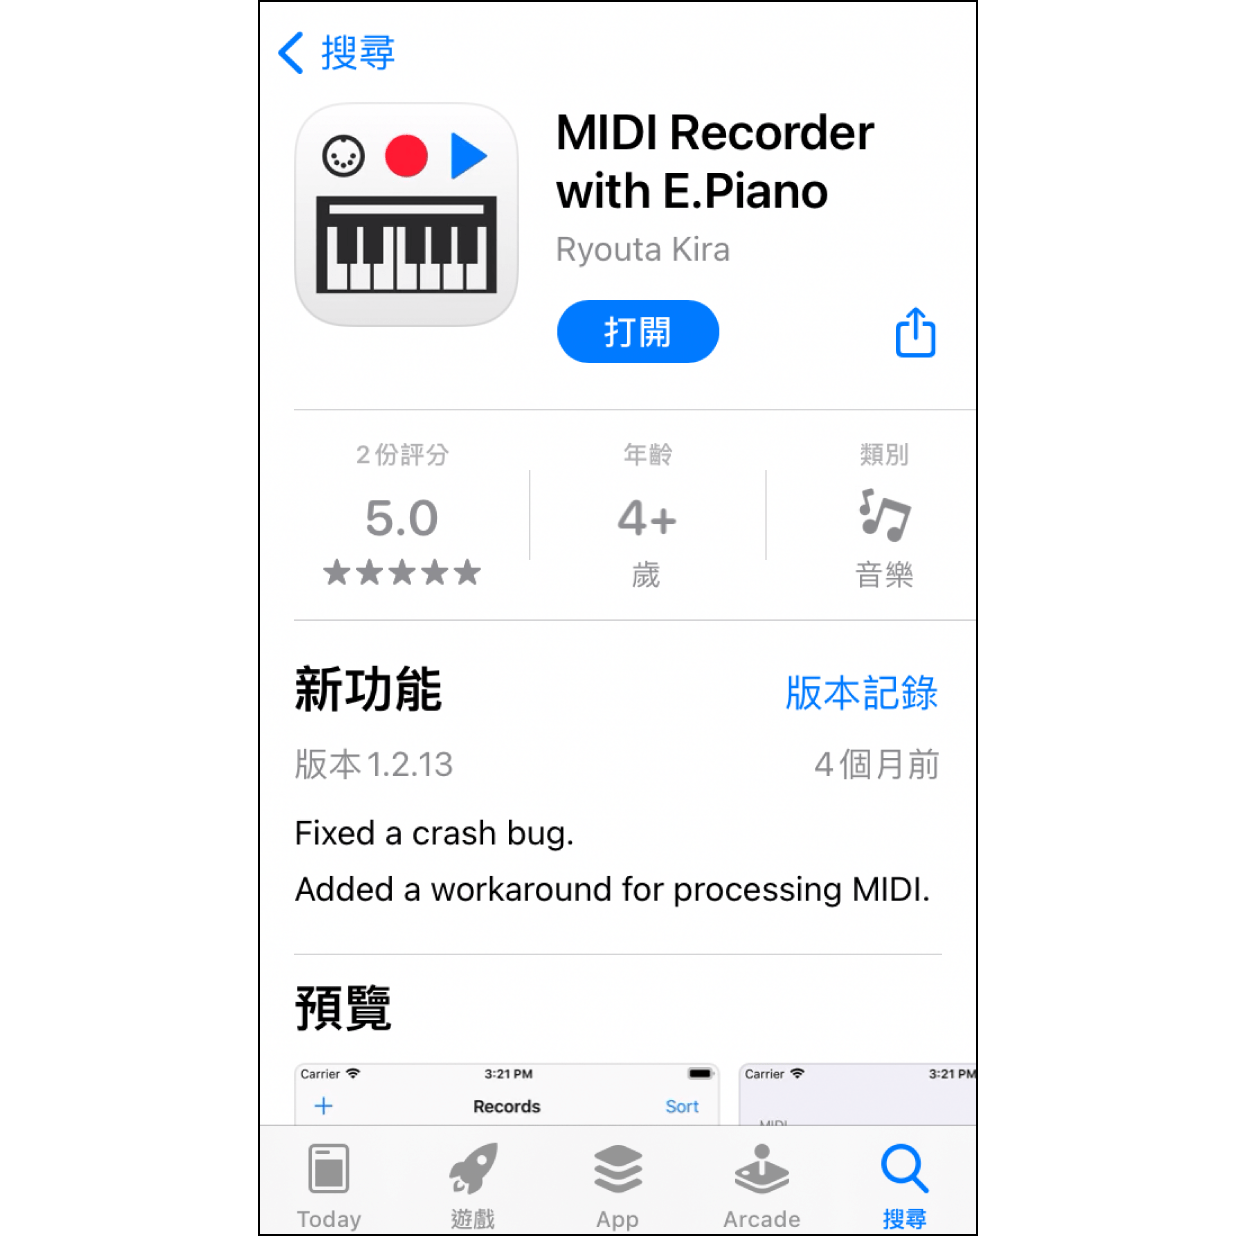 1. 安裝應用程式在App Store中搜尋並安裝MIDI Recorder with E.Piano。